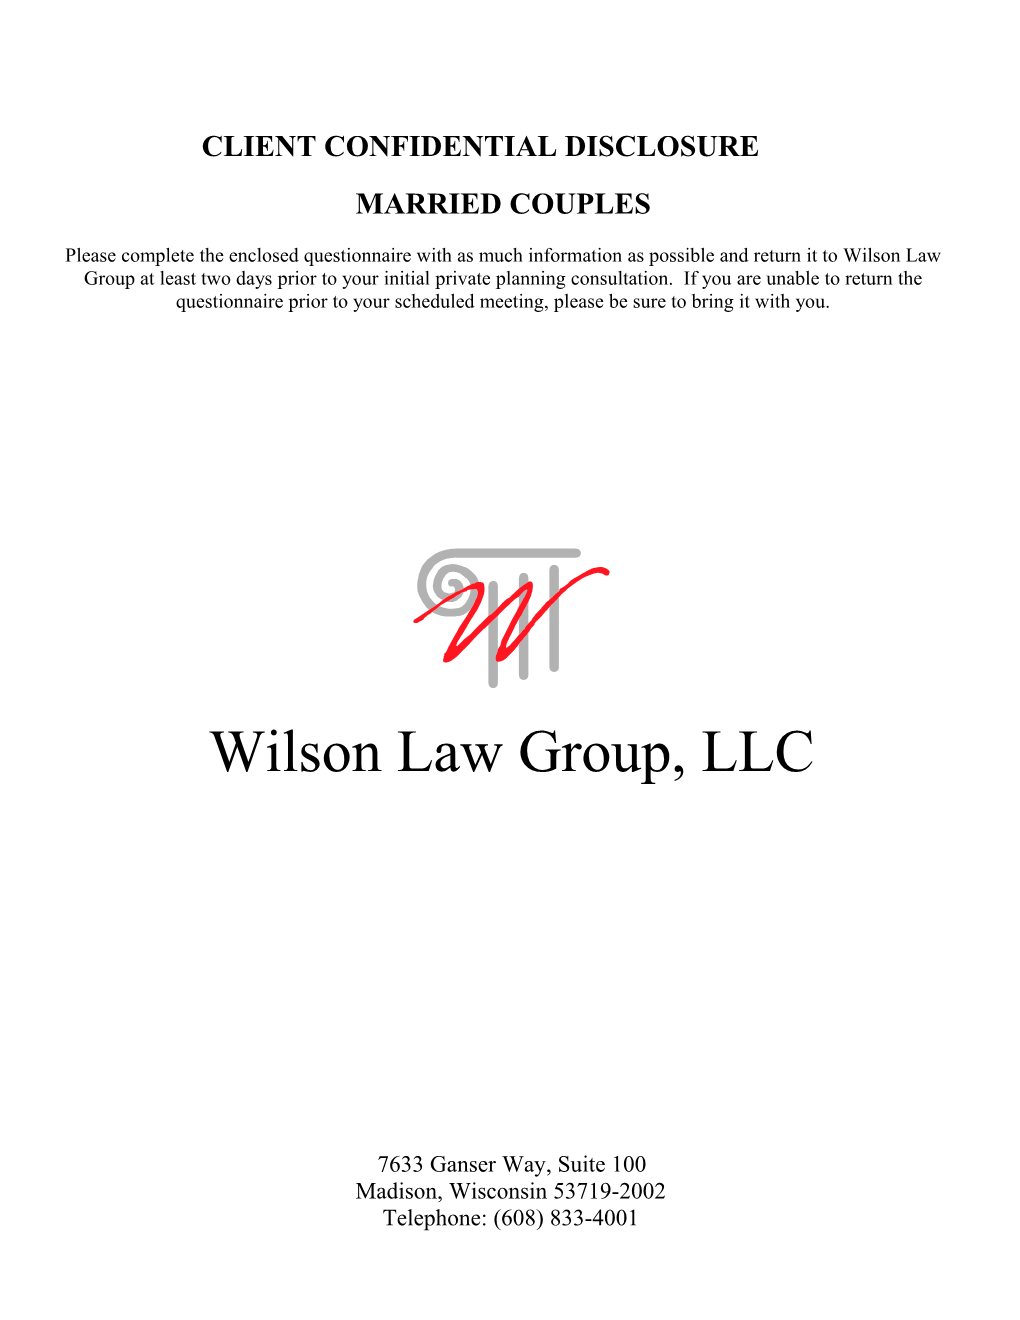 Client Confidential Disclosure - Married (JAN0299)